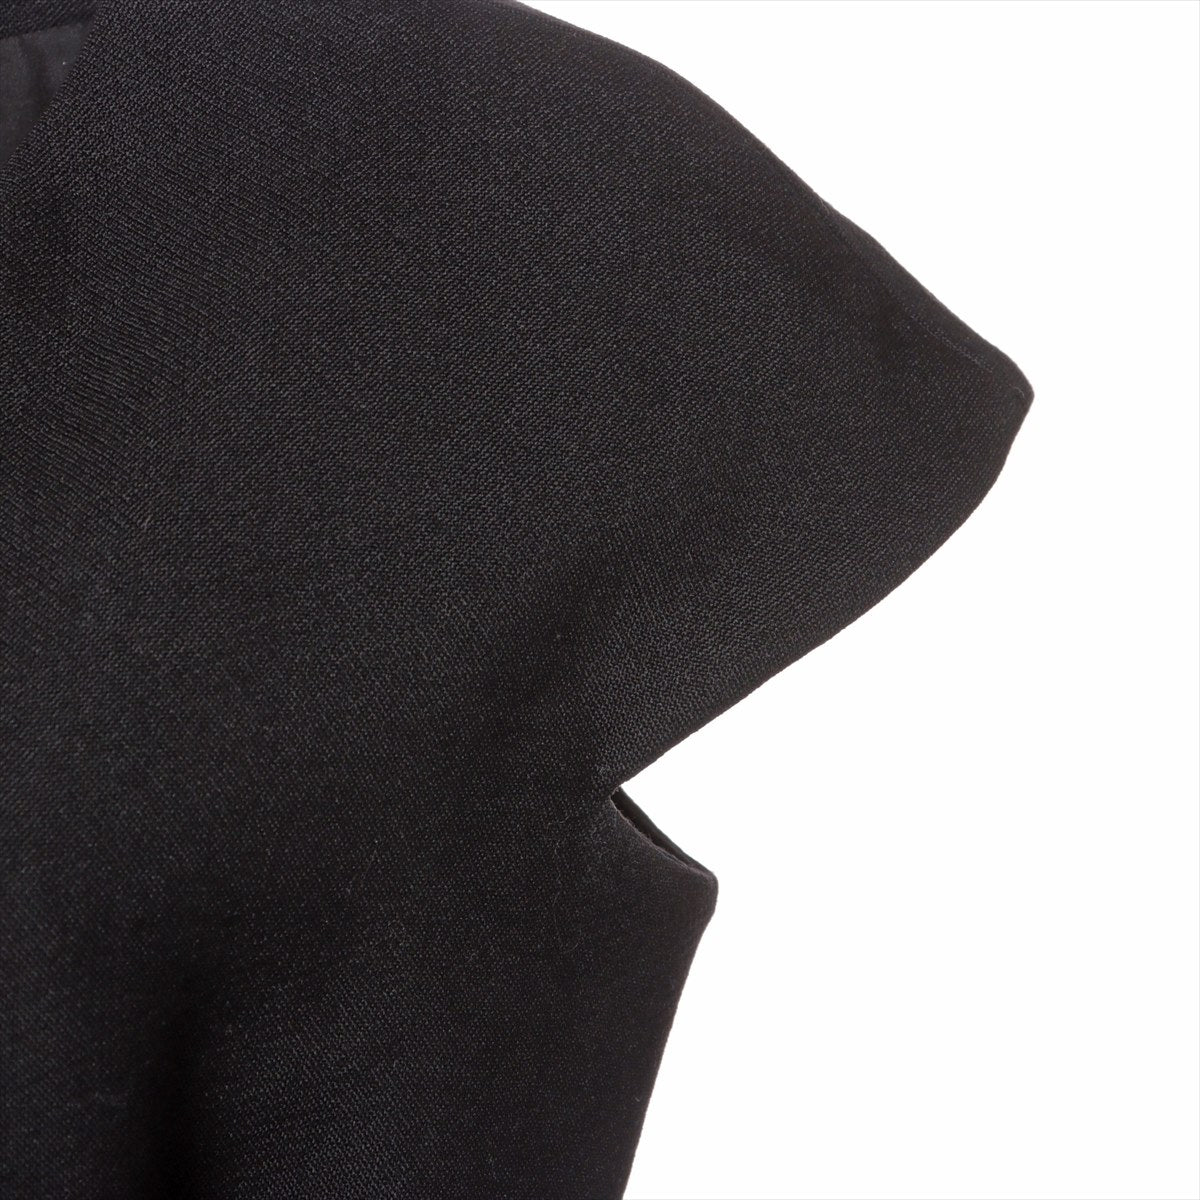 Louis Vuitton 23AW Wool  Silk One Earrings 34  Black XXL Detail Caped Dress Monogram RW232W